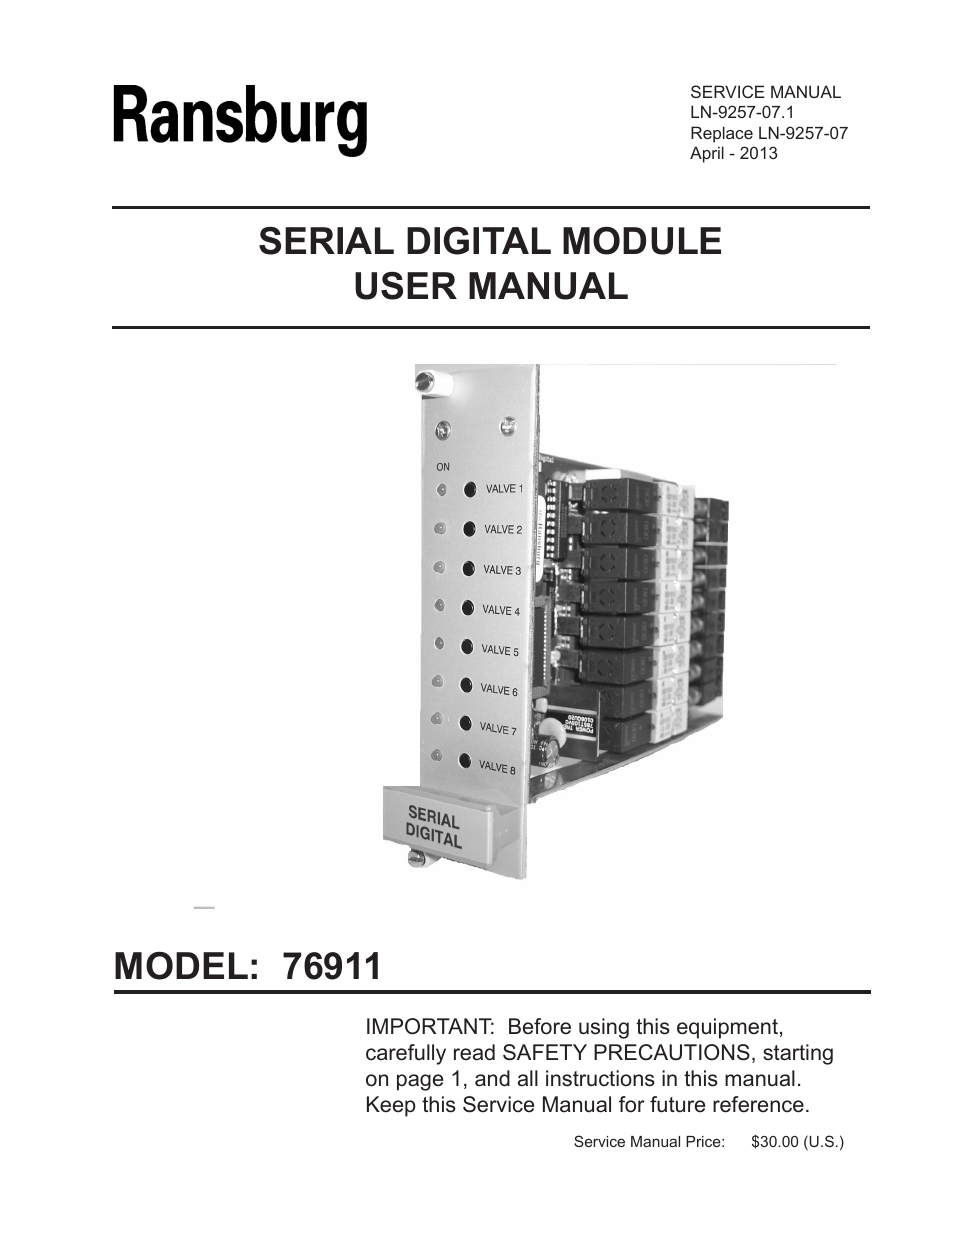 Serial Digital Module 76911